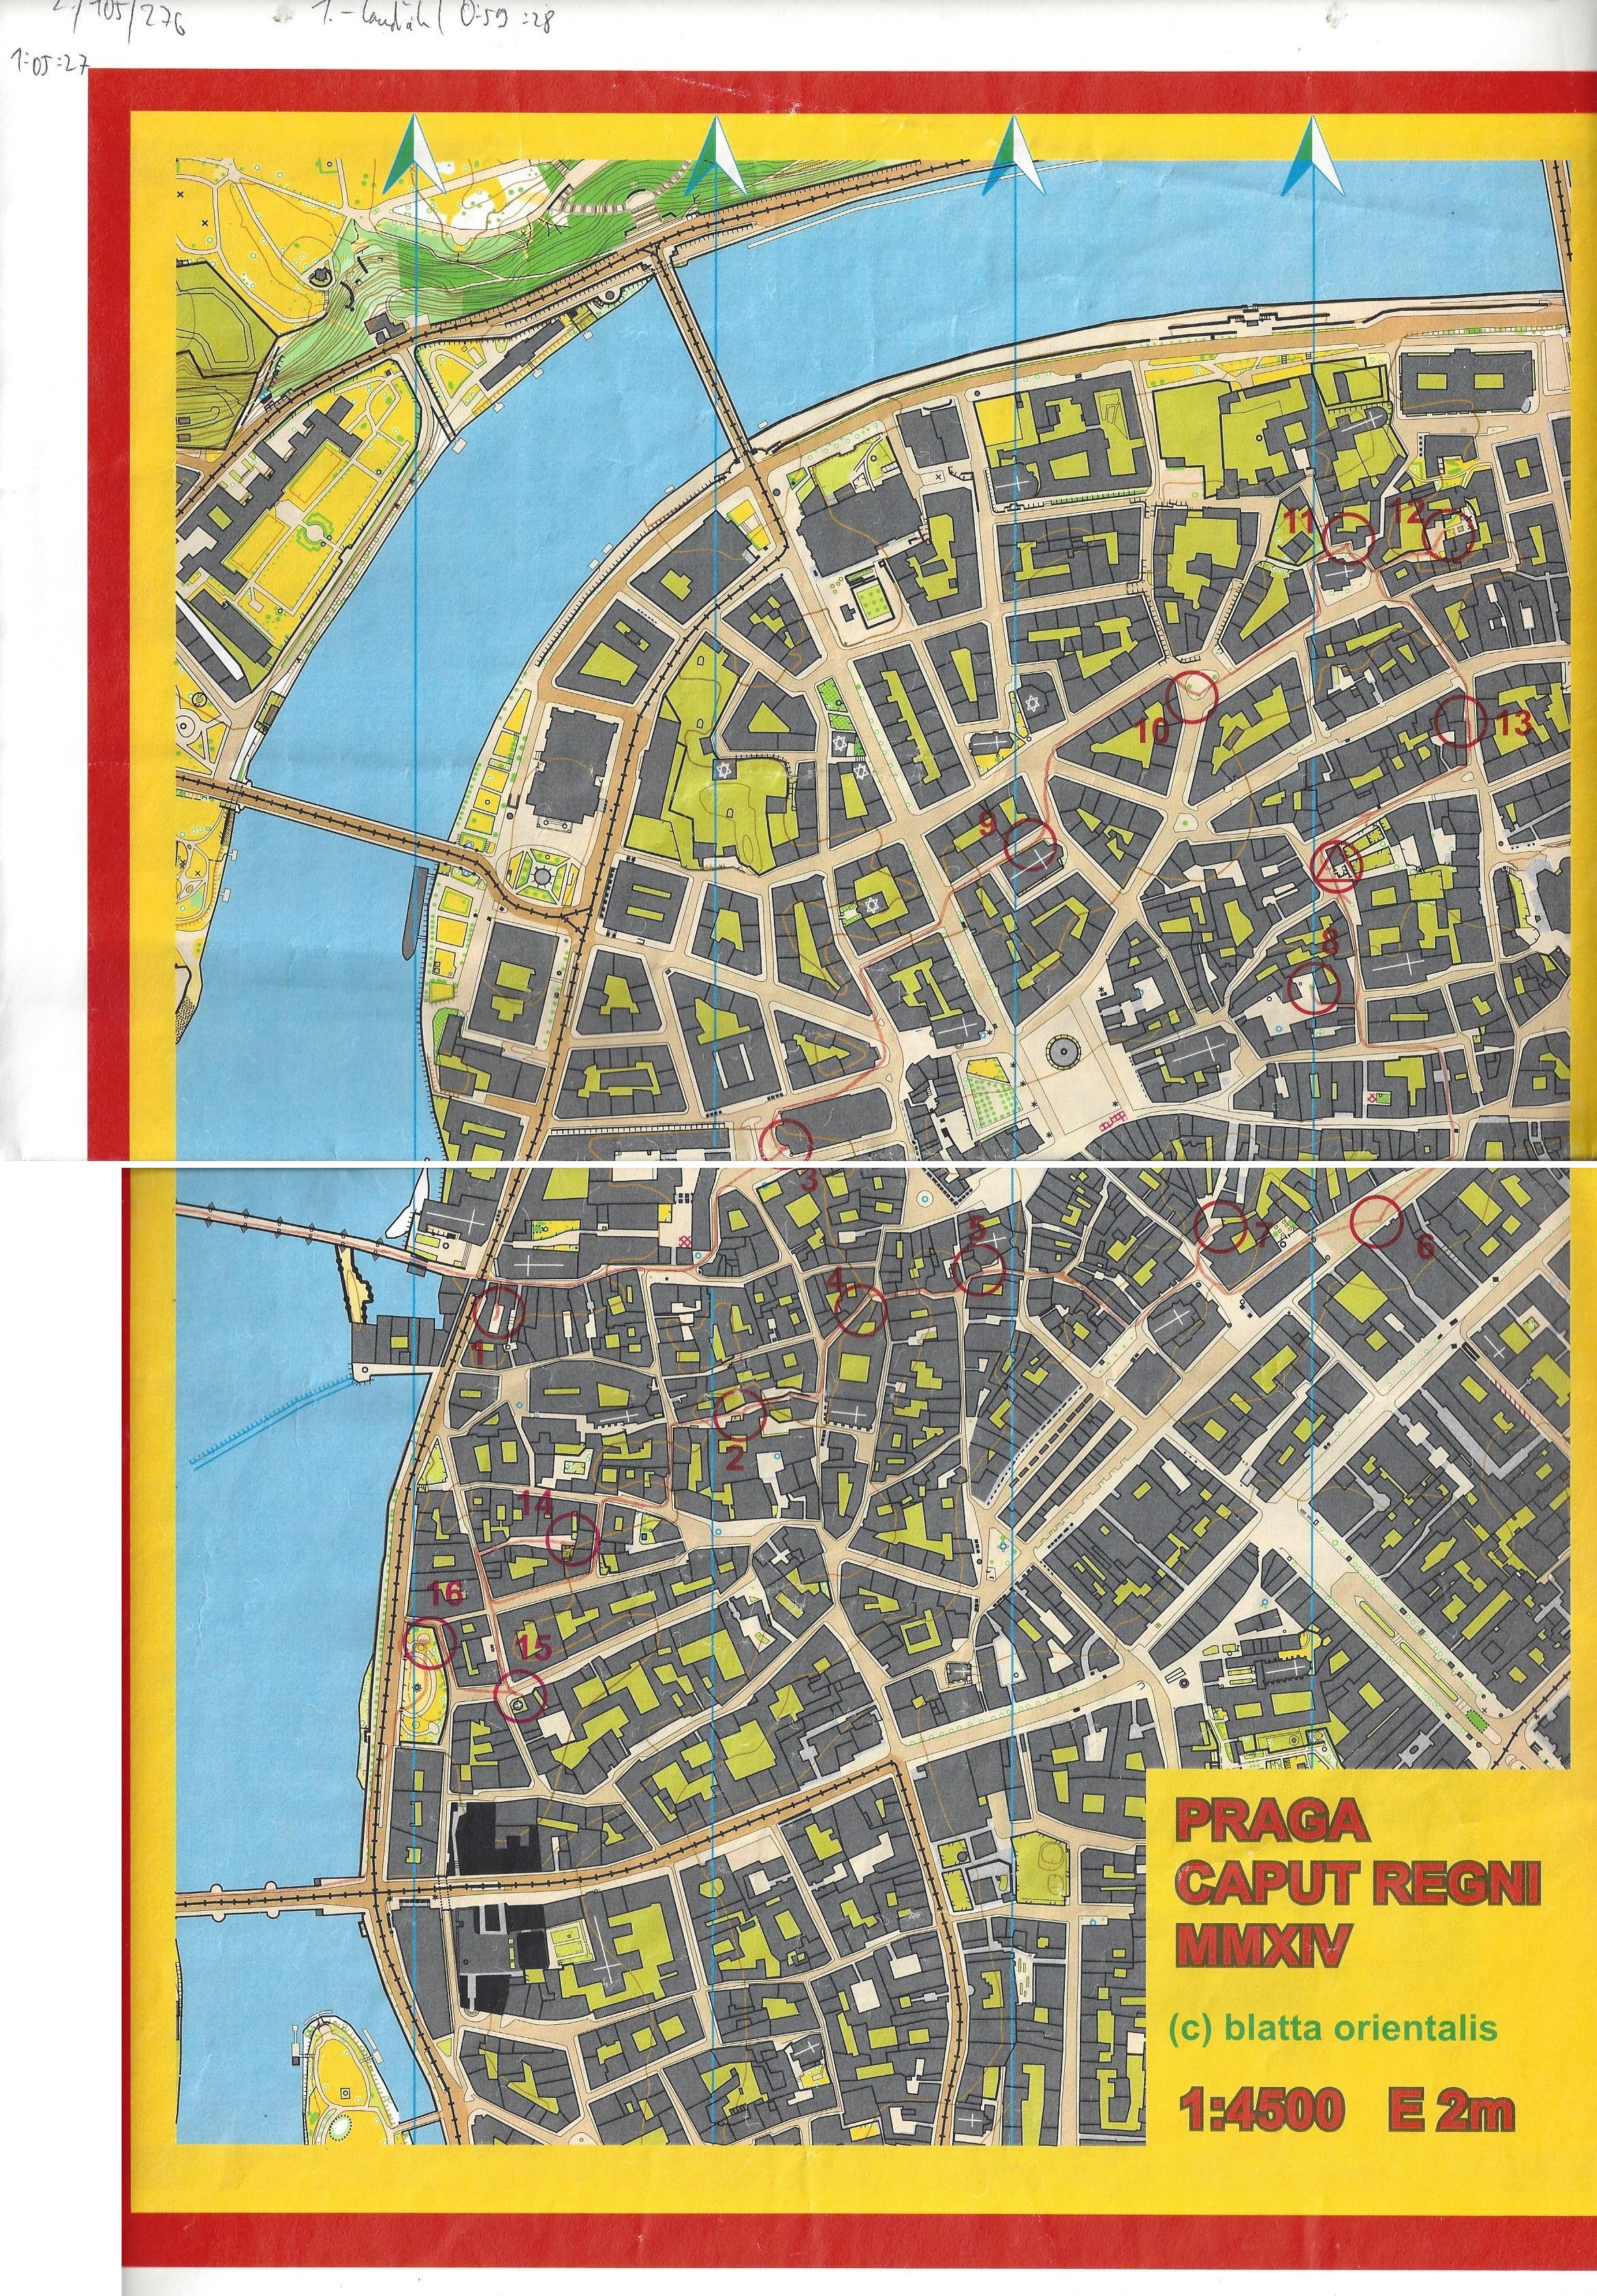 Praga Magica 2014 - mapa 1 (08/03/2014)